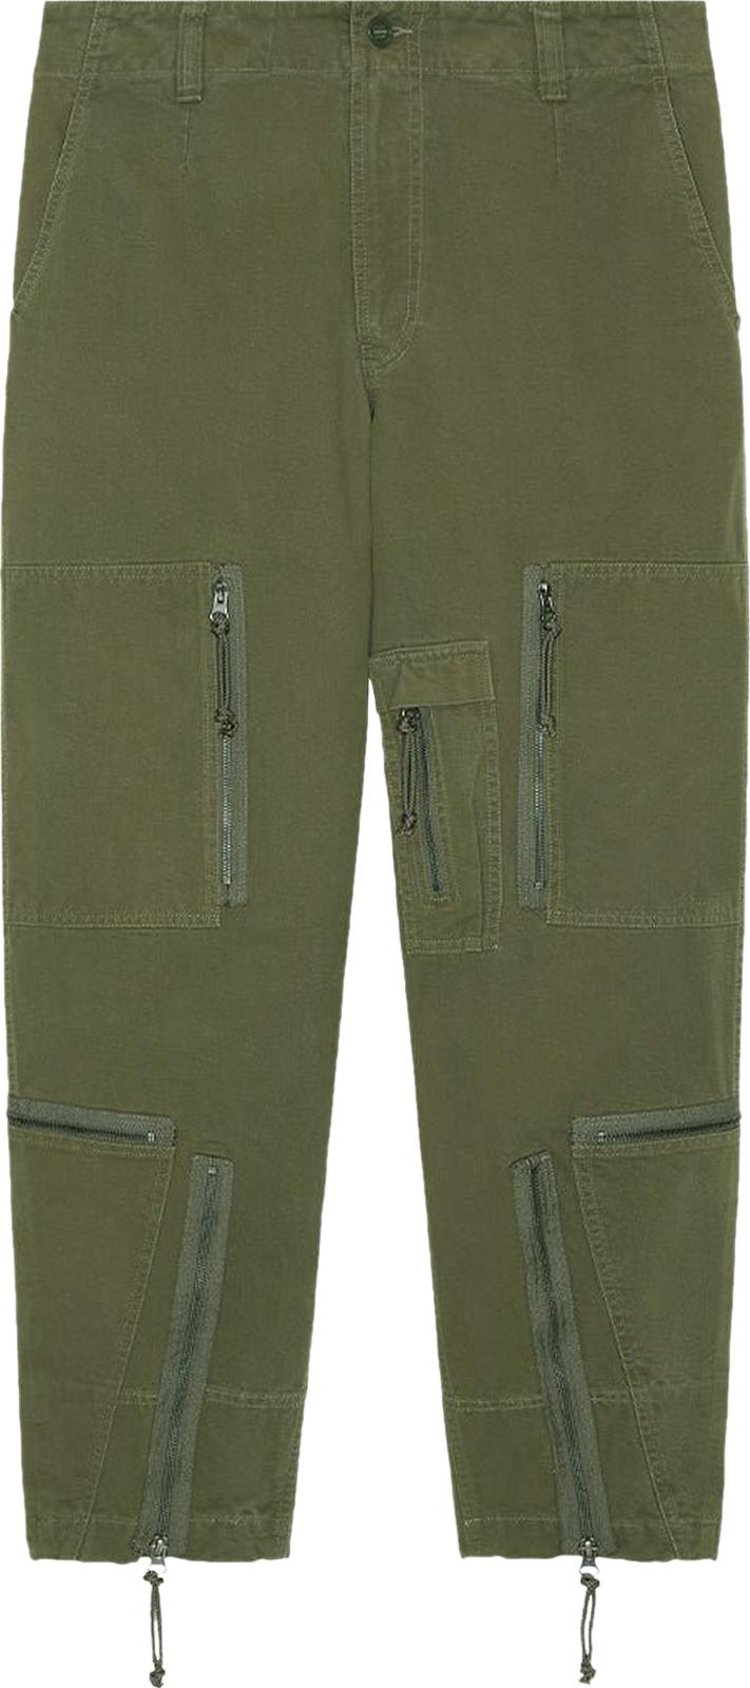 Cav Empt Yossarian Pants #6 'Khaki'